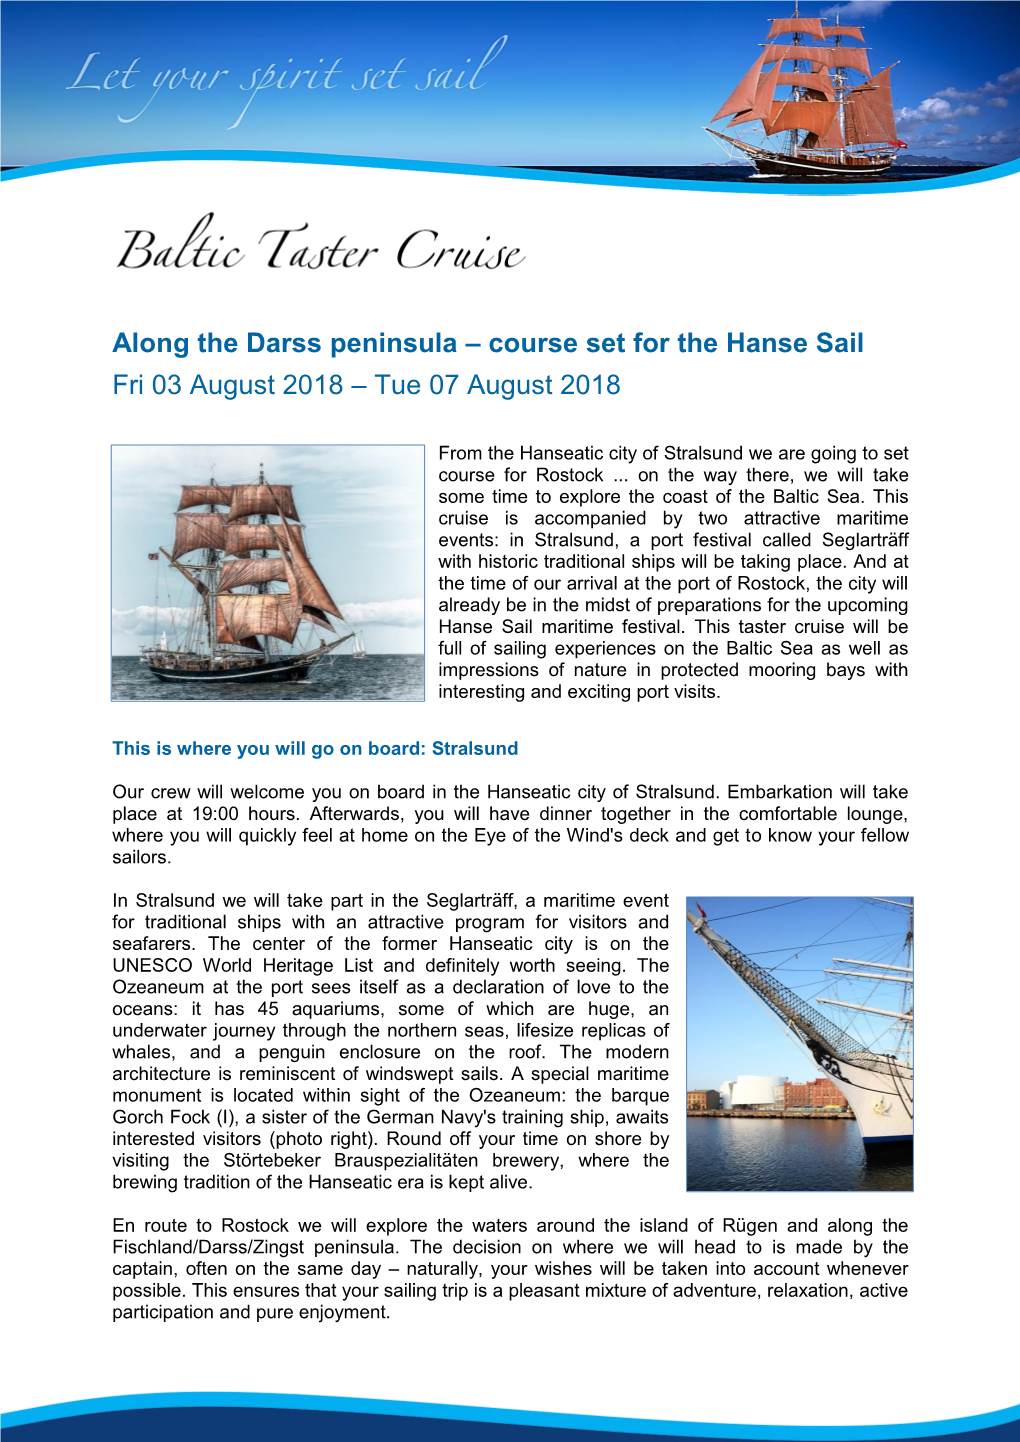 Along the Darss Peninsula – Course Set for the Hanse Sail Fri 03 August